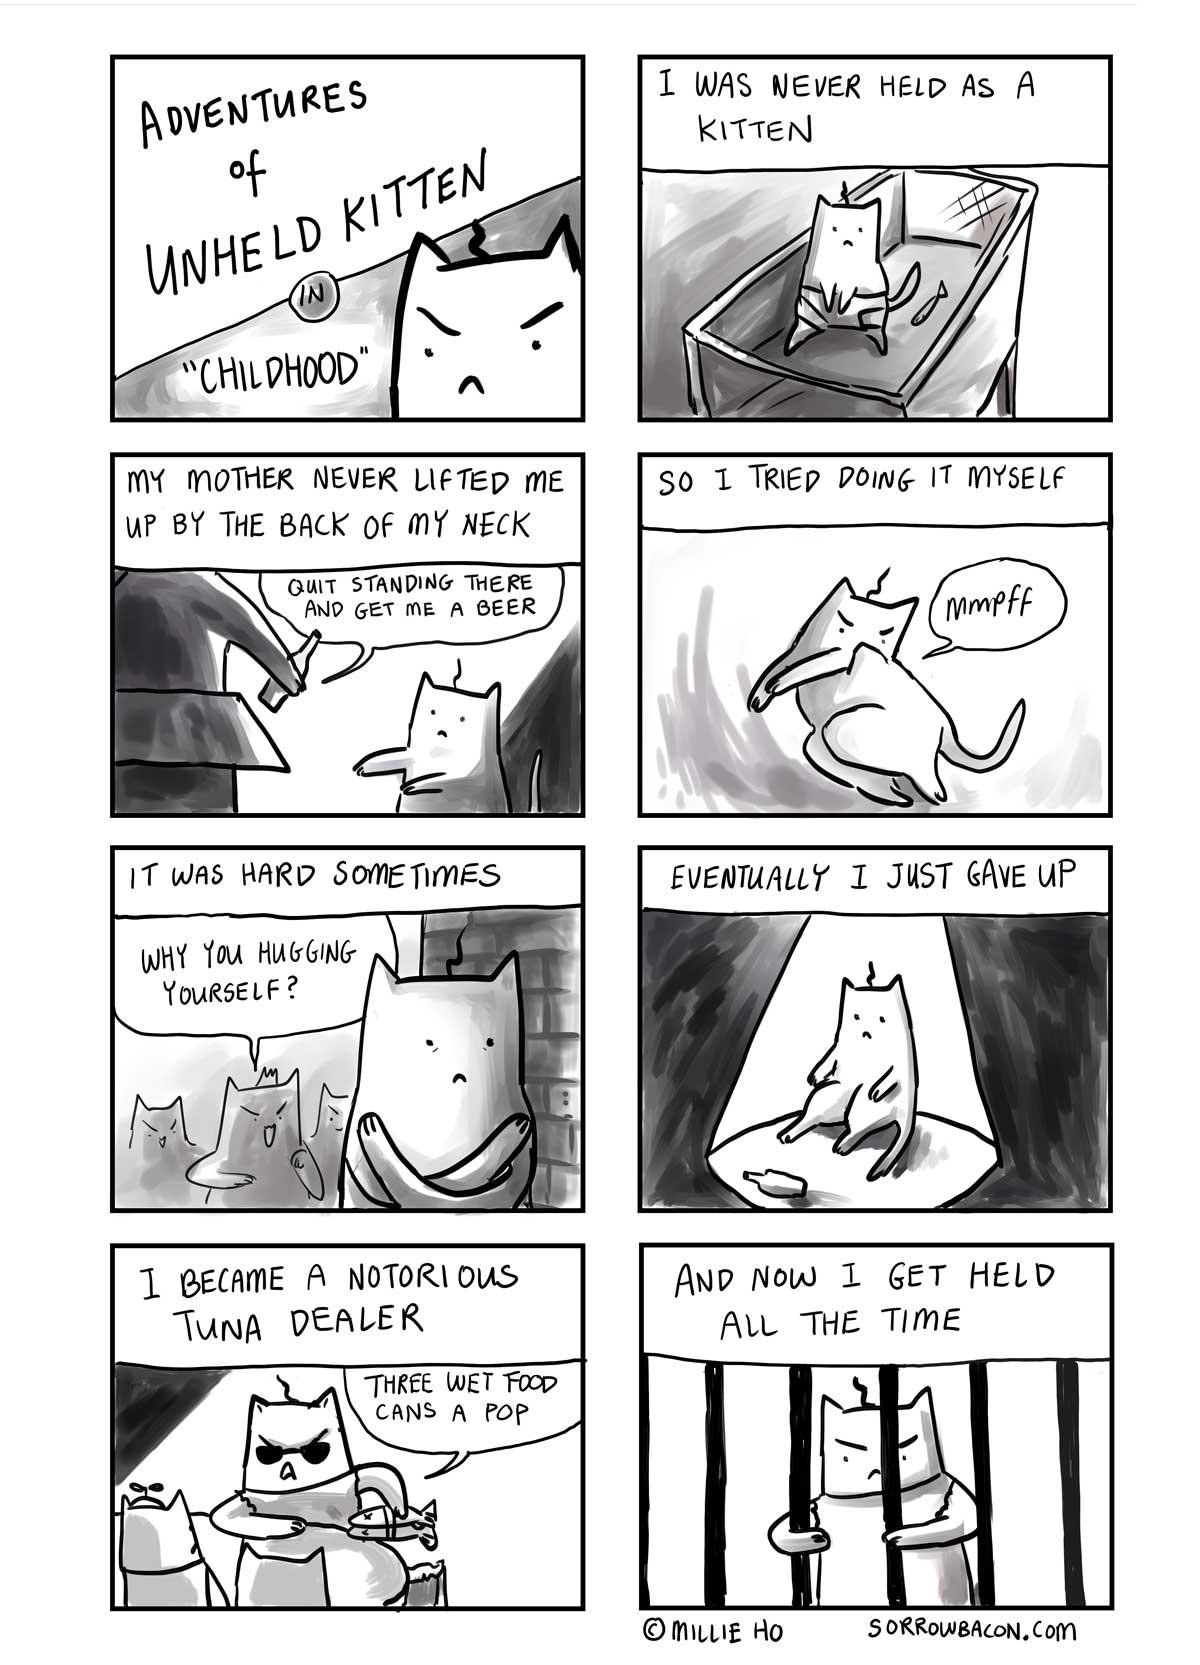 Unheld Kitten sorrowbacon comic